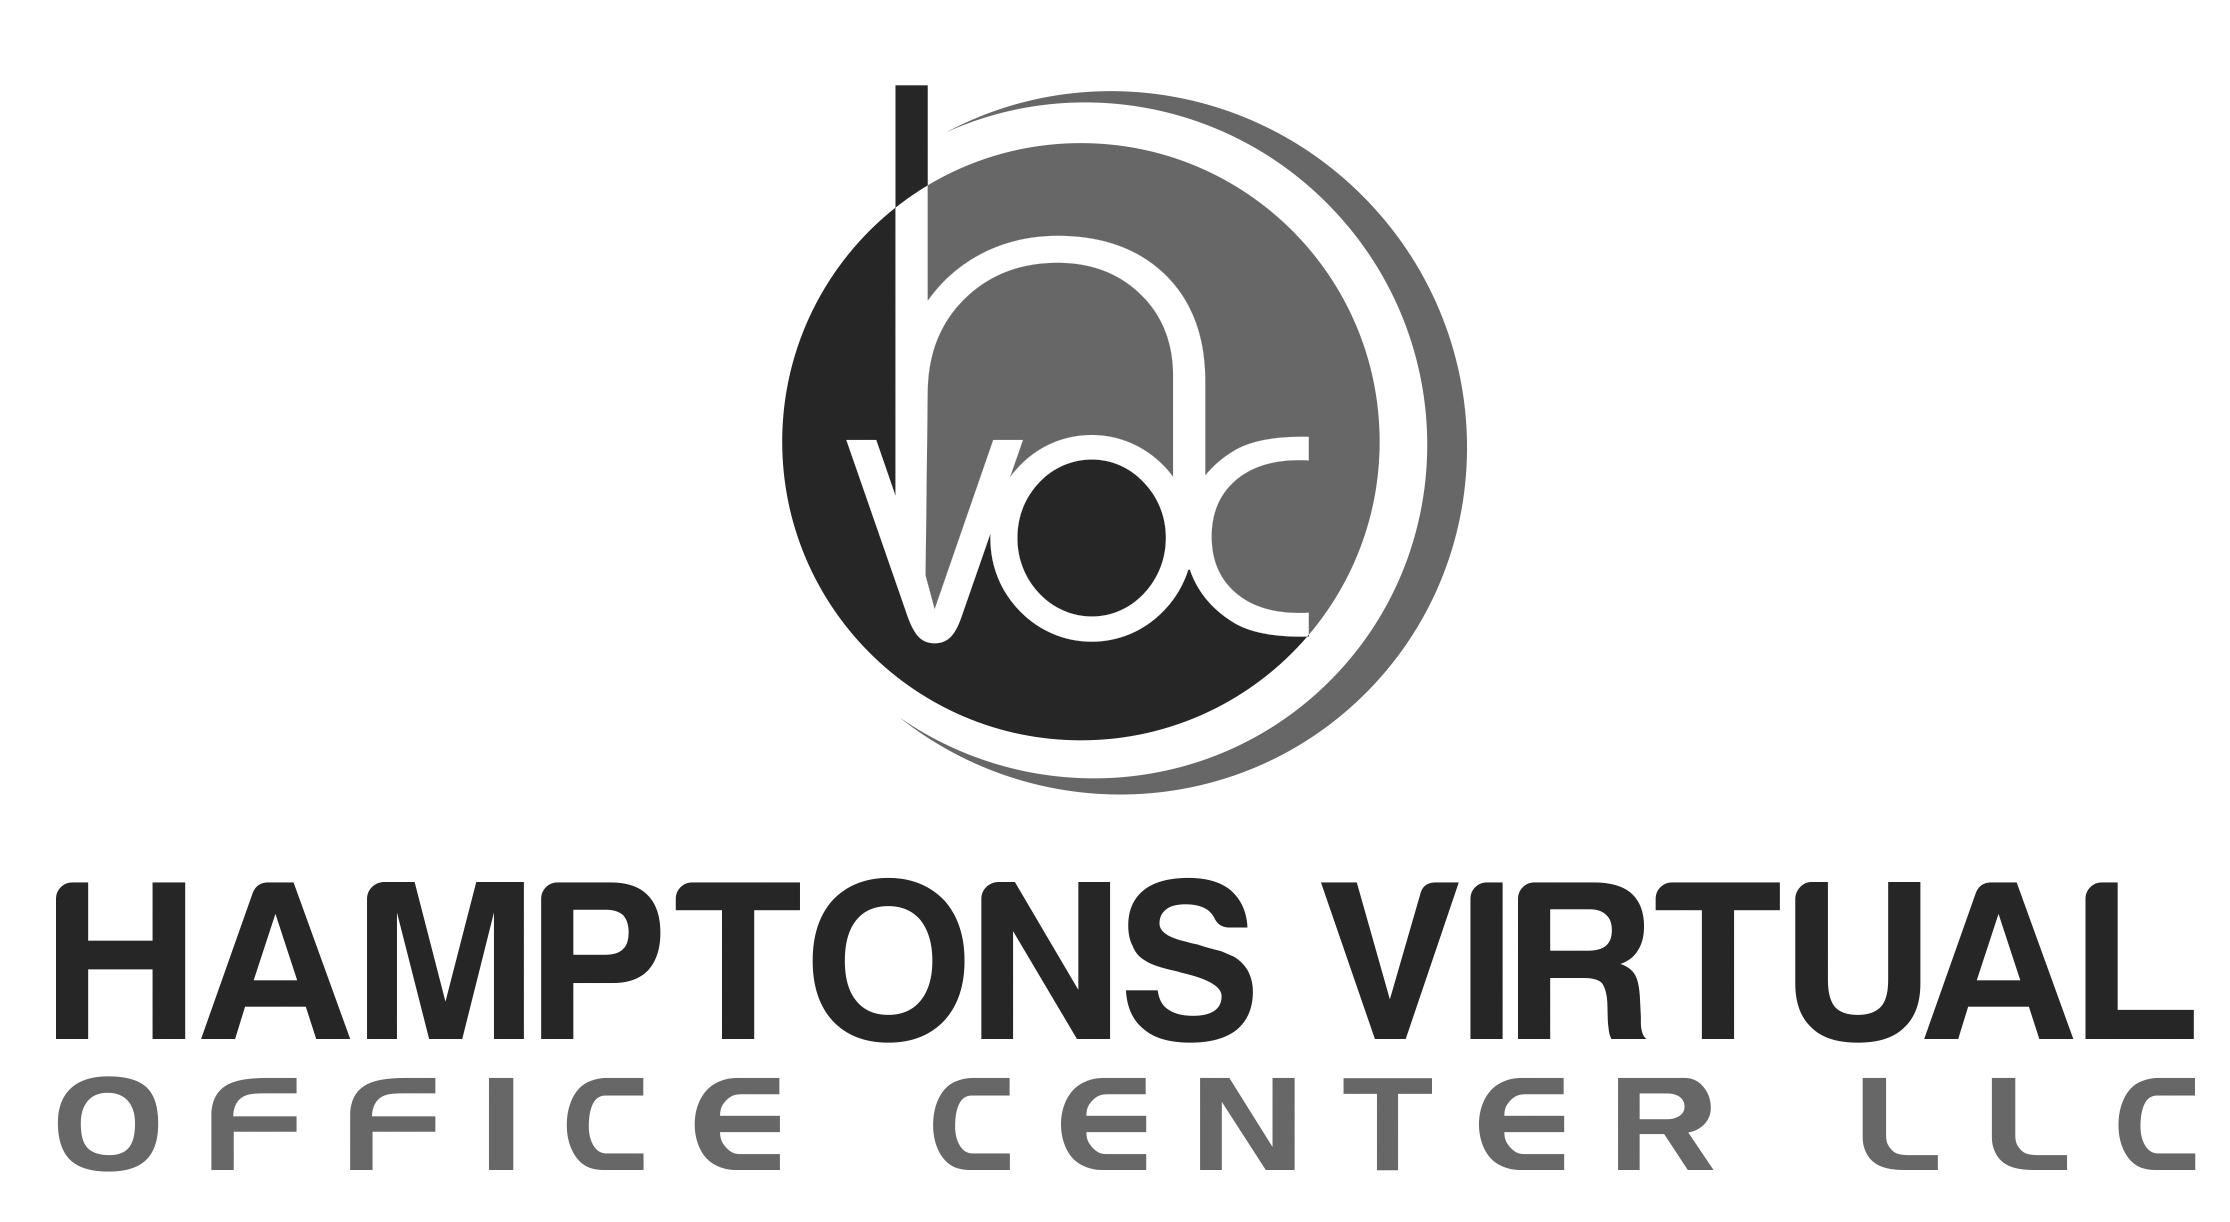 Hamptons Virtual Office Center_gray.png